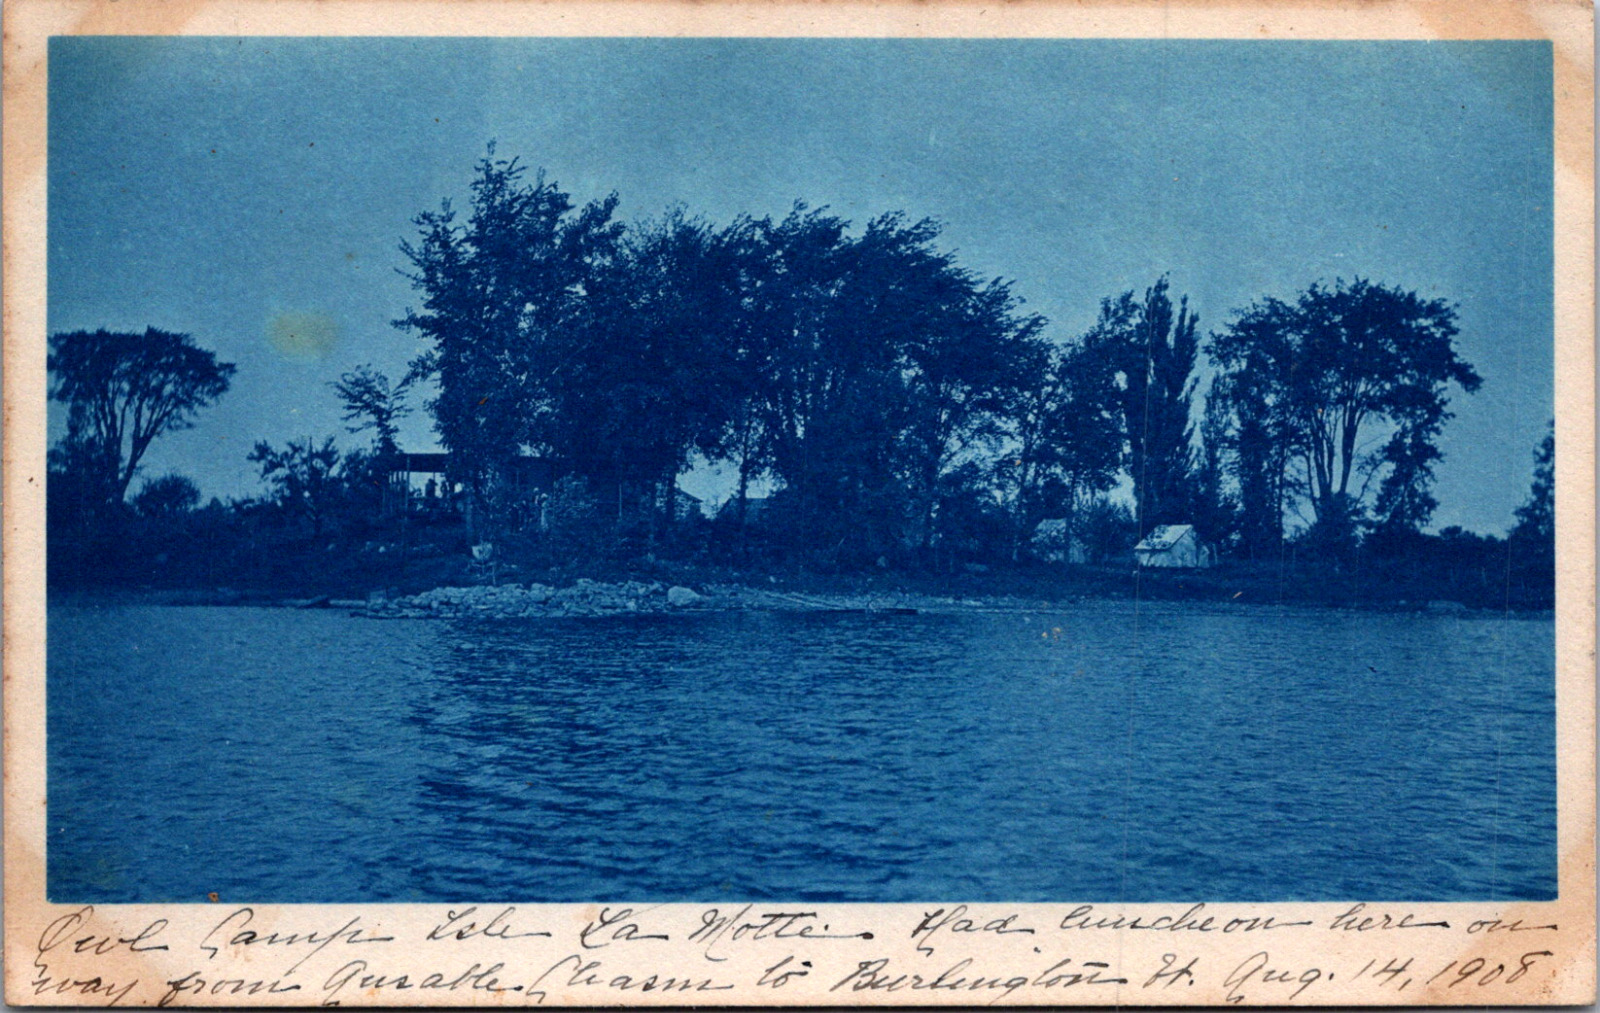 Isle La Motte VT Owl Head Camp cool cyanotype-like view c1908 vintage postcard